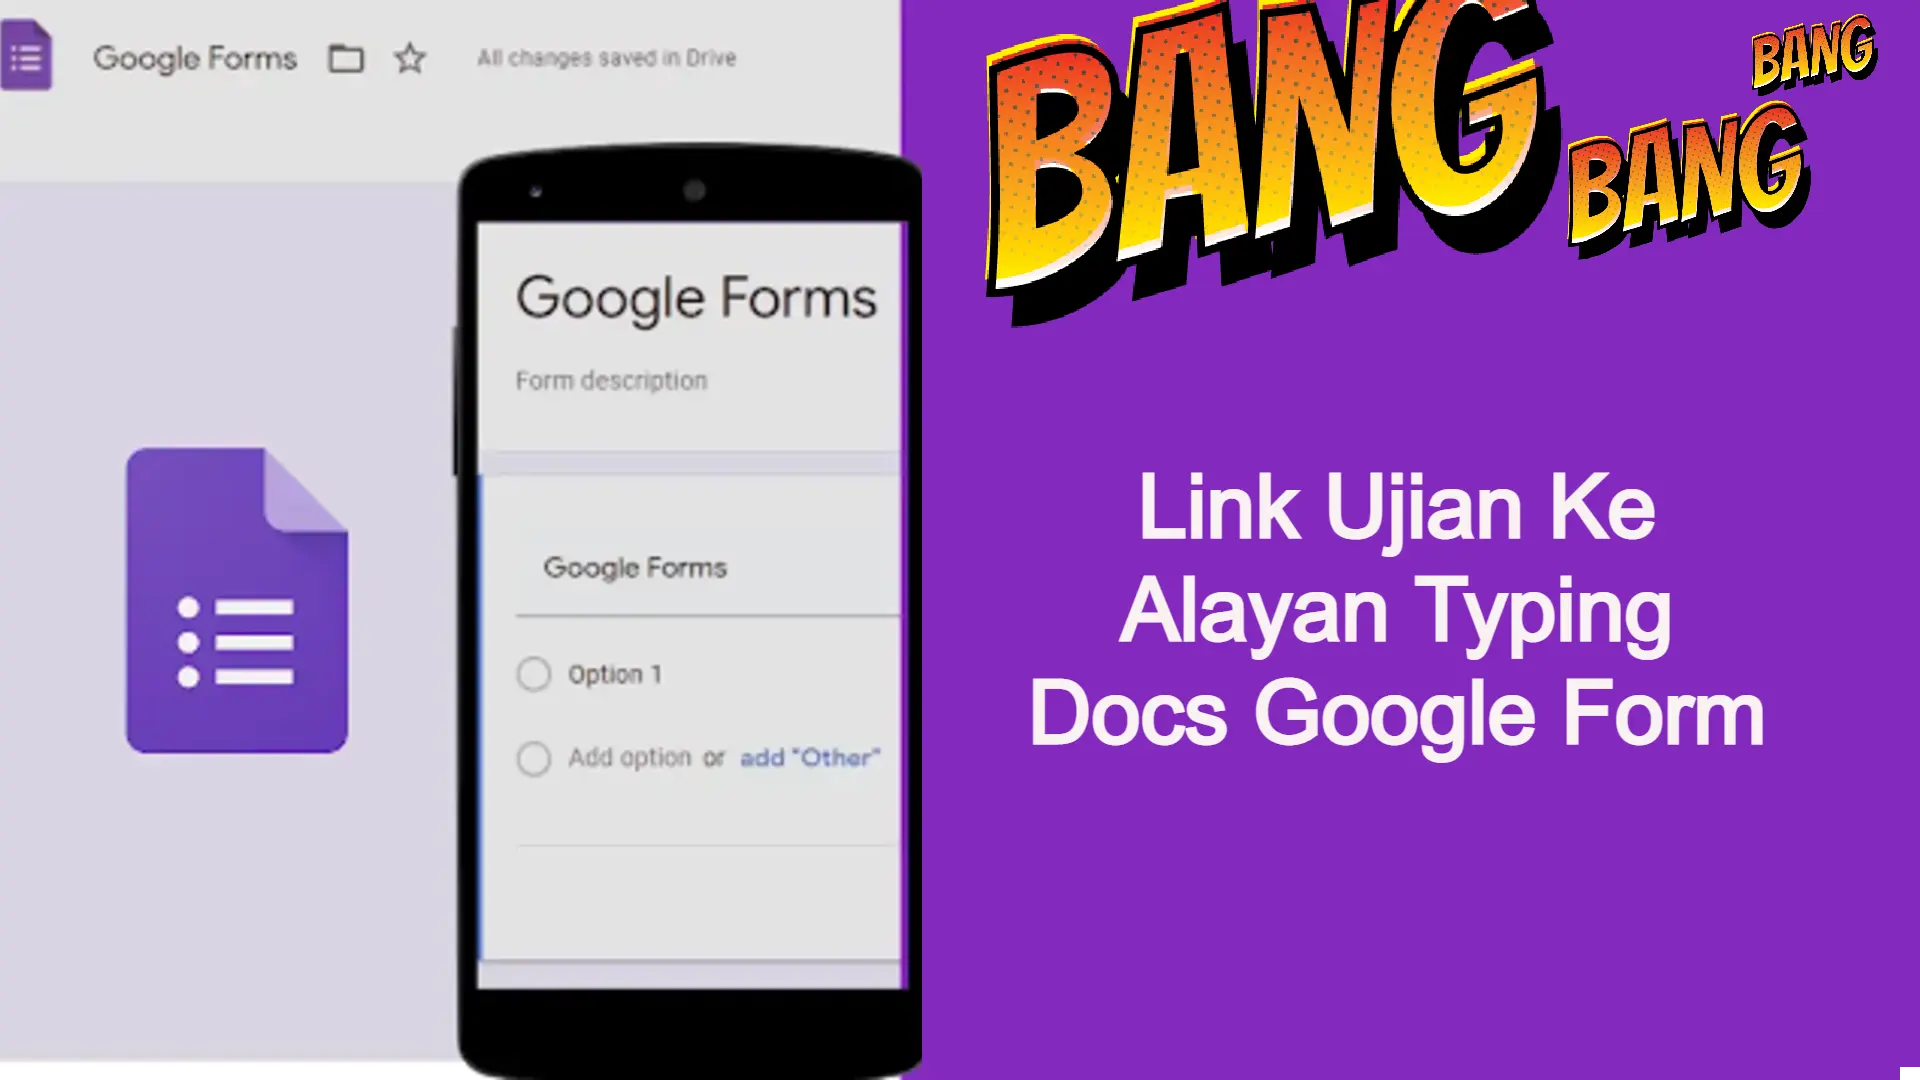 Link Ujian Ke Alayan Typing Docs Google Form